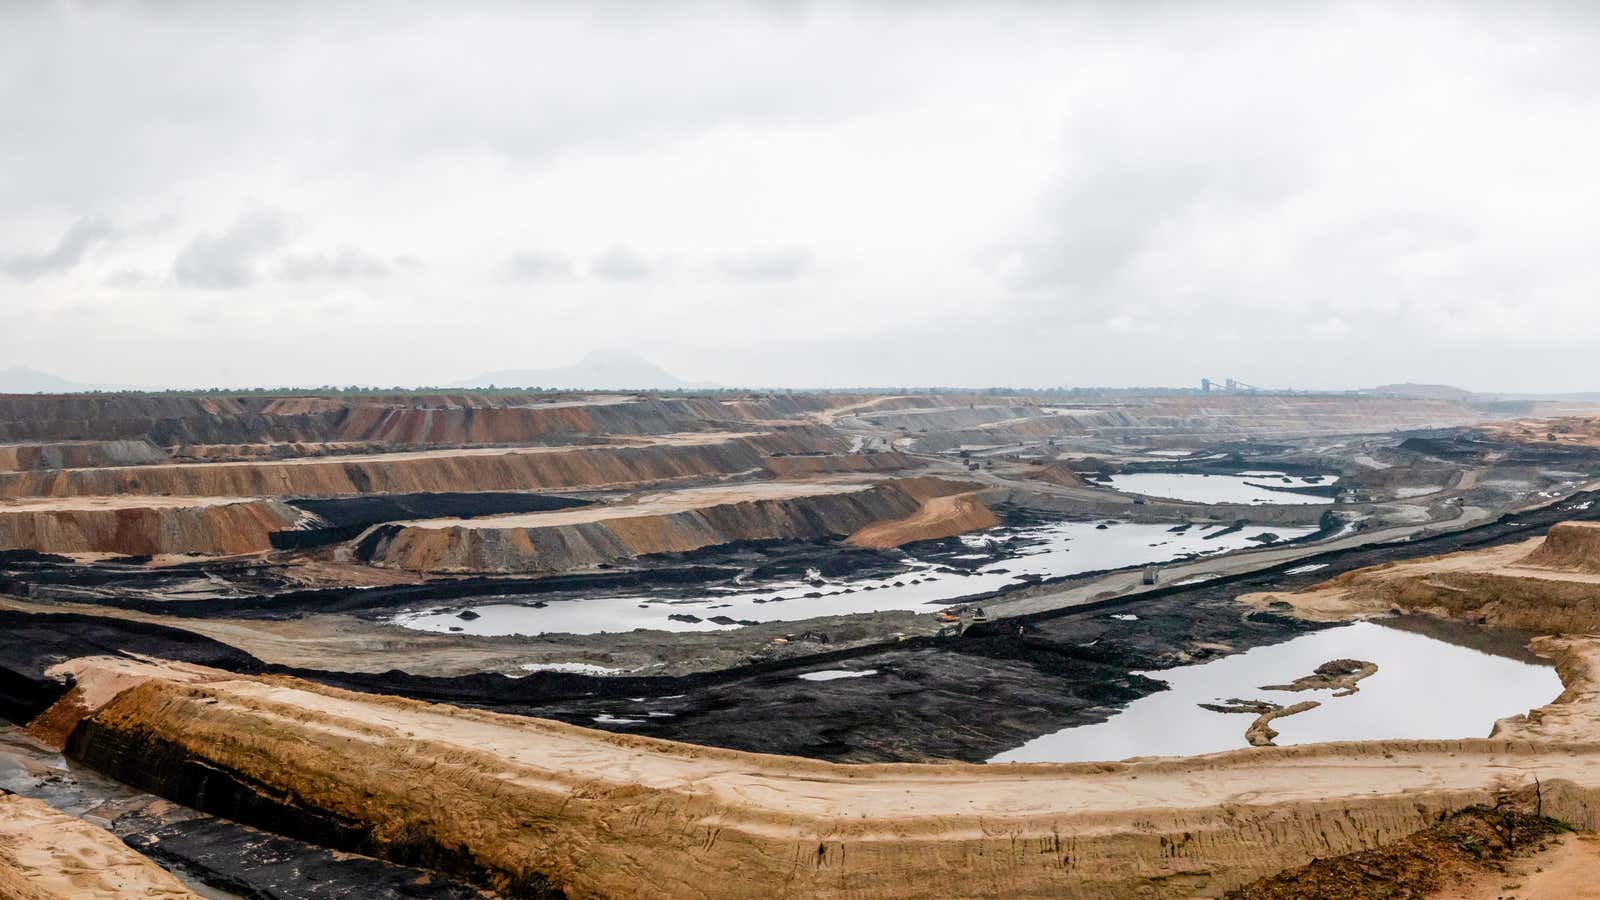 The Adani-run PEKB coal mine in Surguja, Chhattisgarh, India.